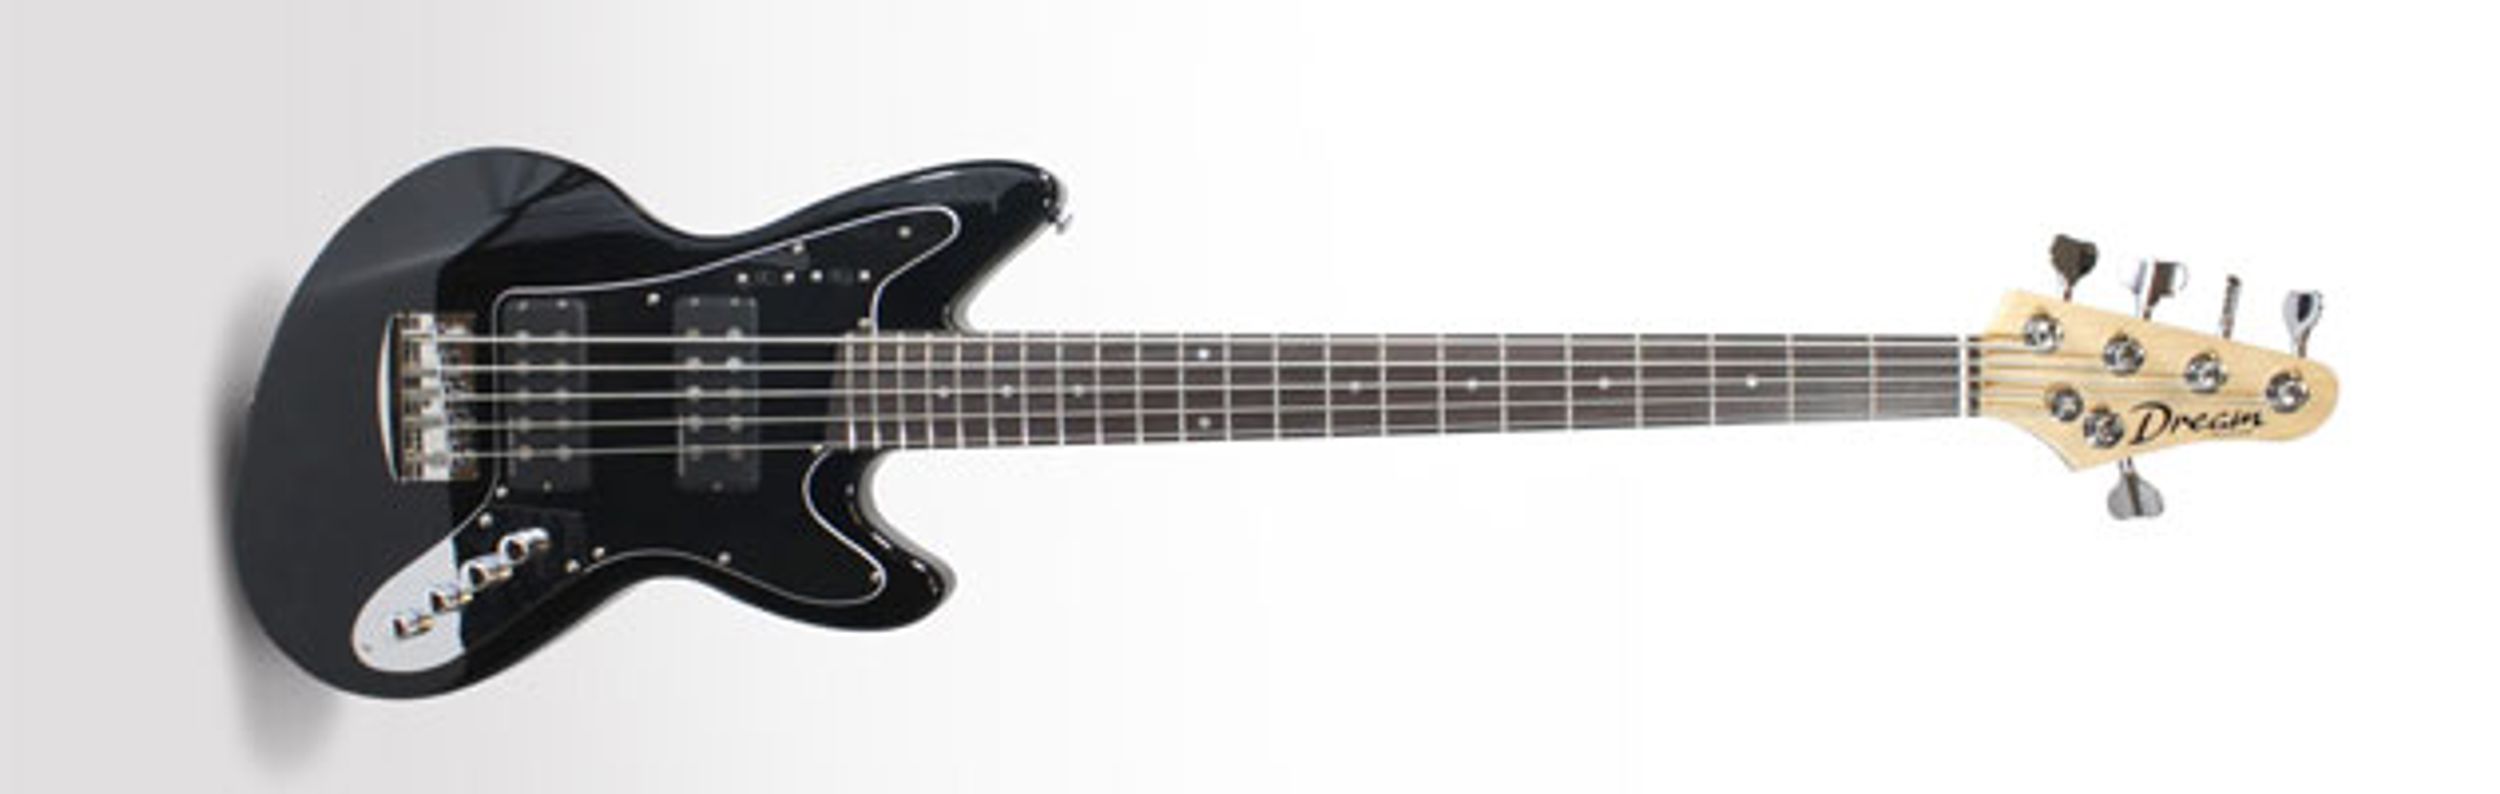 Dream Studio Guitars Introduces the M5 Bass